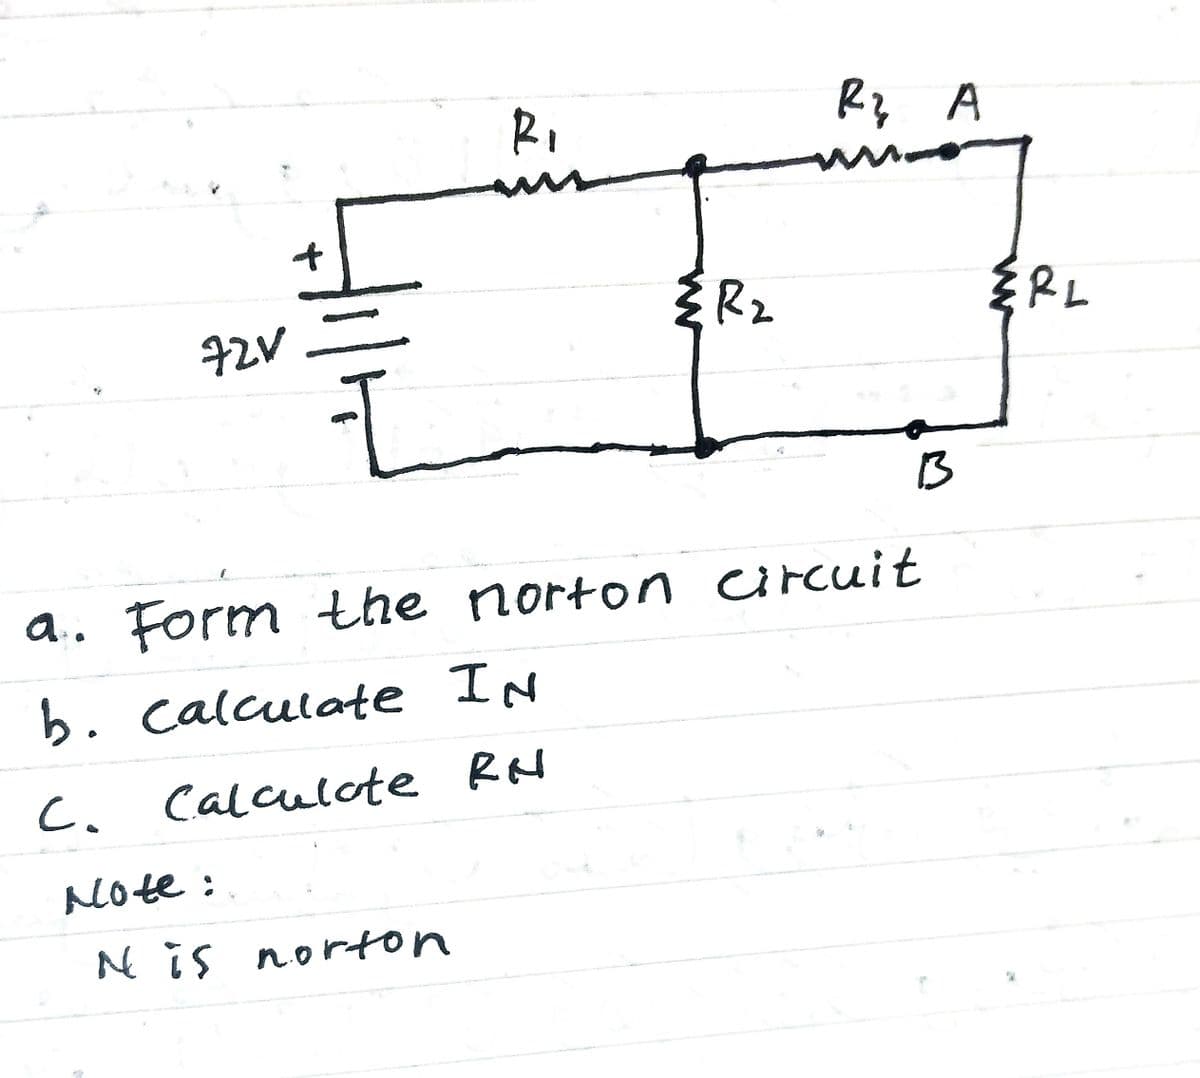 Rq A
of
72V
Rz
{ RL
B
a.. Form the norton urcuit
b. calculate IN
C. Calculote RN
Note:
Nis norton
